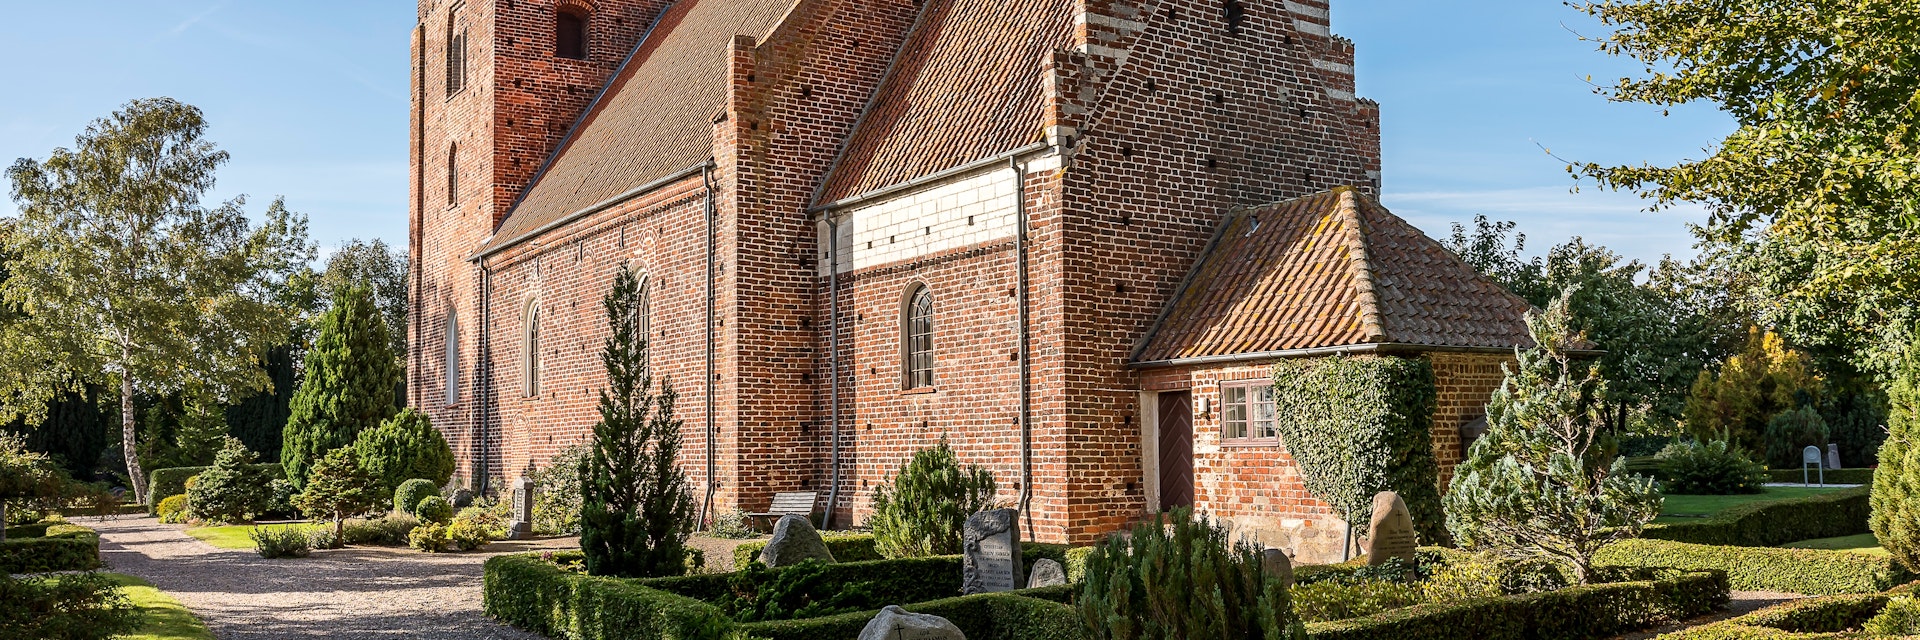 Keldby church famous for its medieval frescos, Denmark.